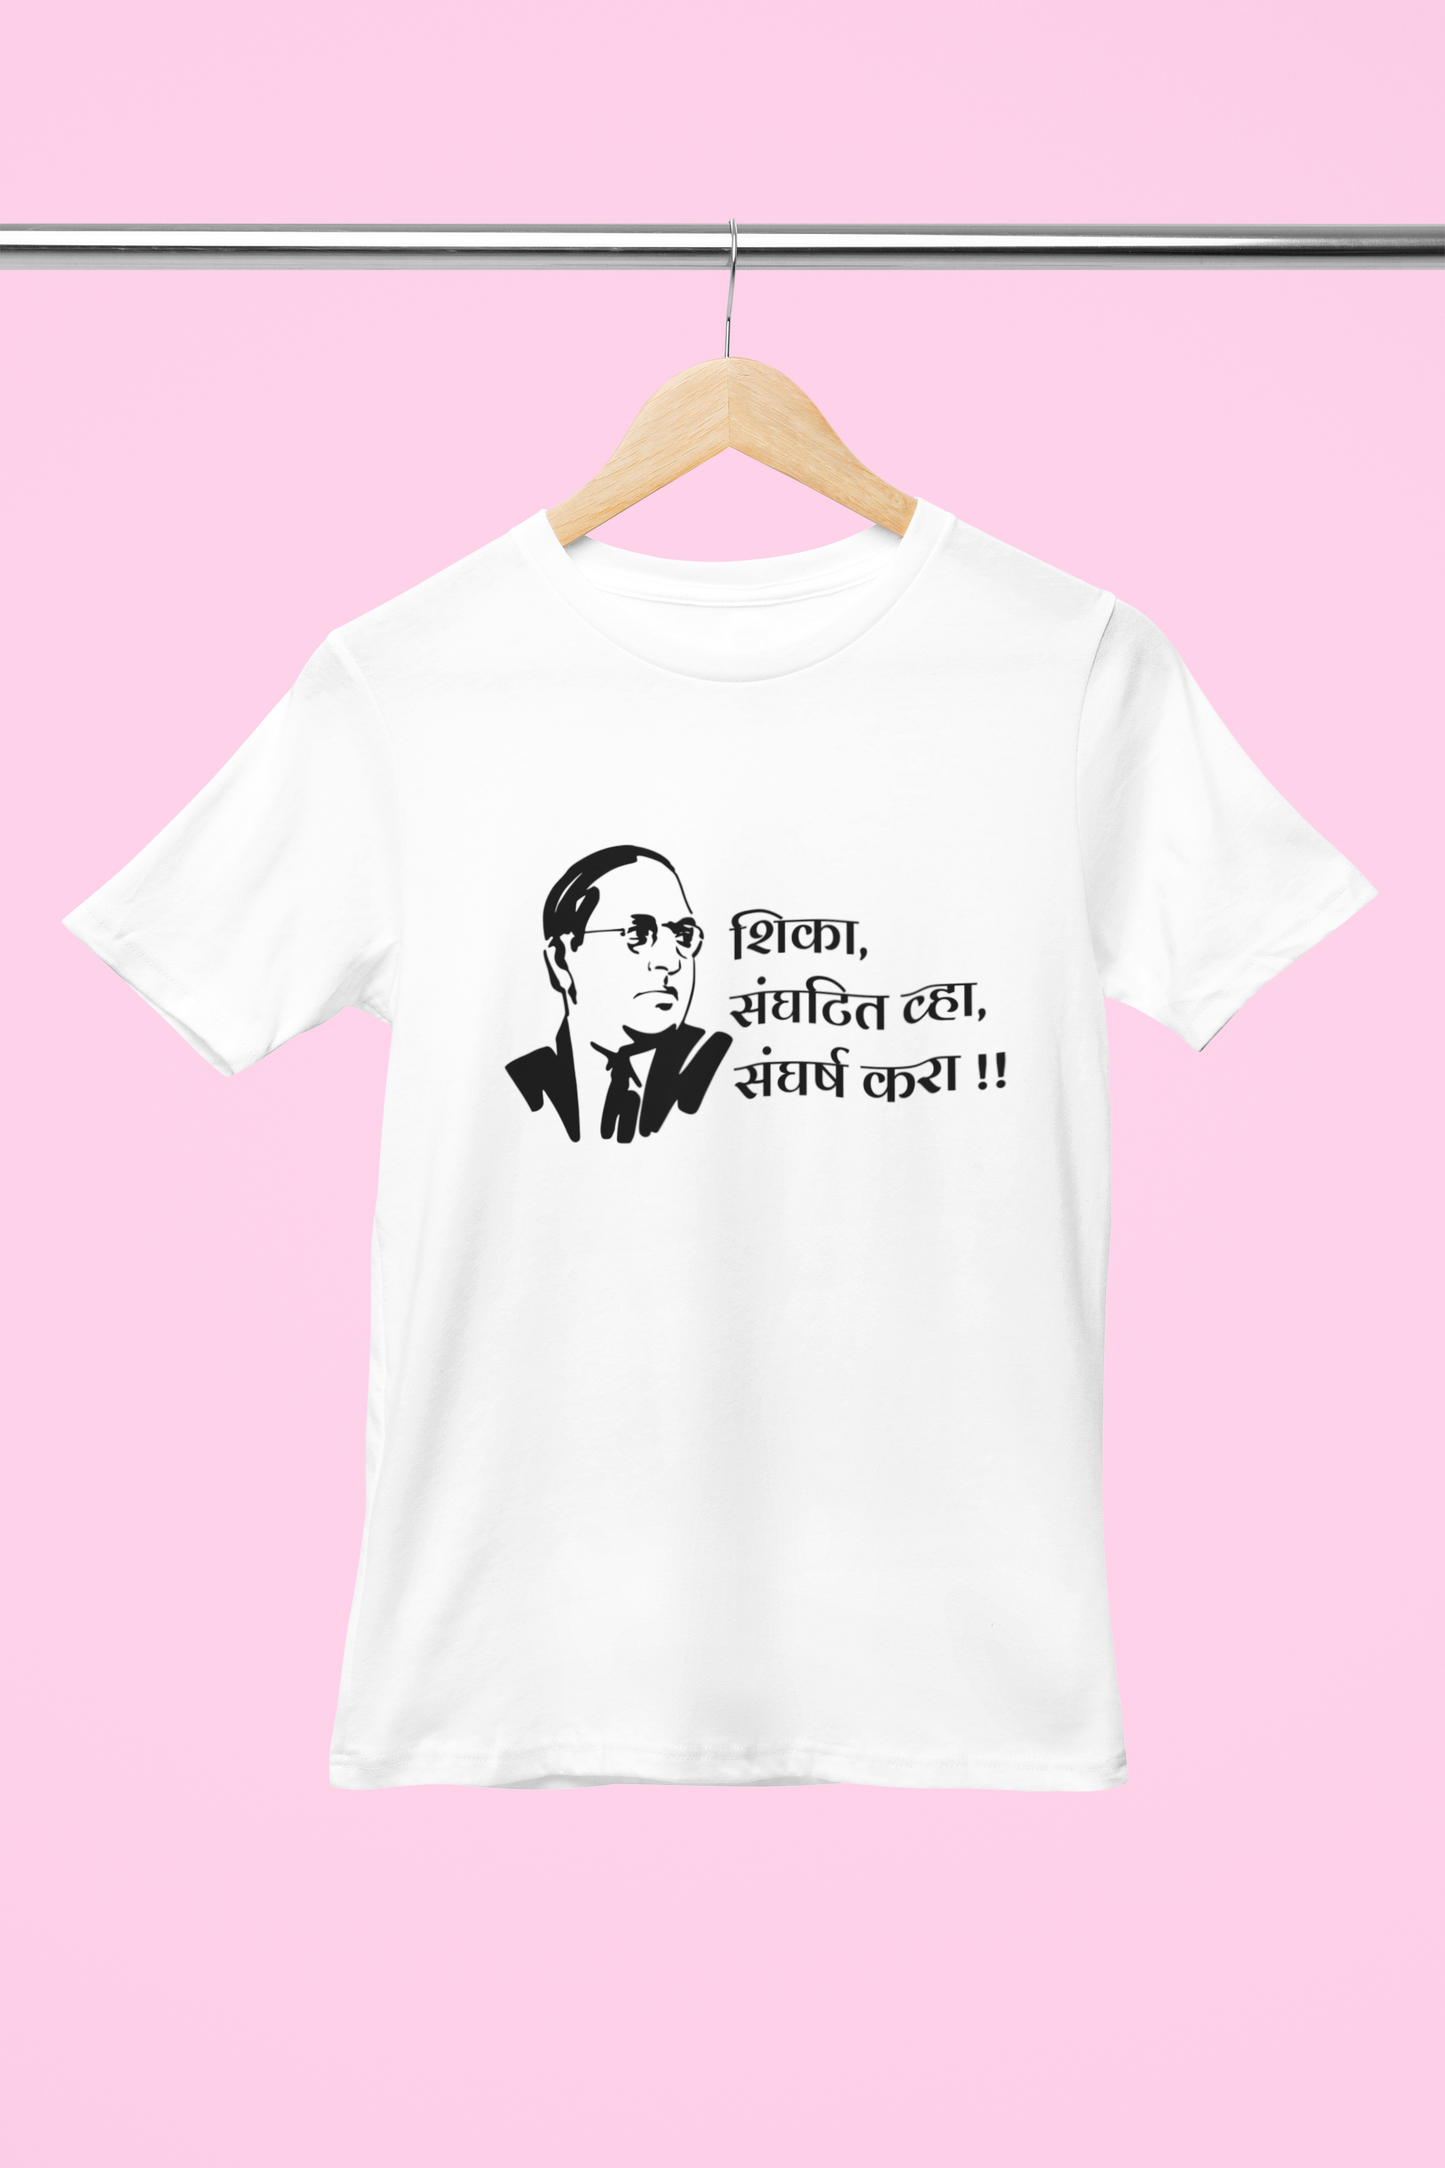 Dr. Babasaheb Ambedkar T Shirt for Men शिका संघटित व्हा, संघर्ष करा